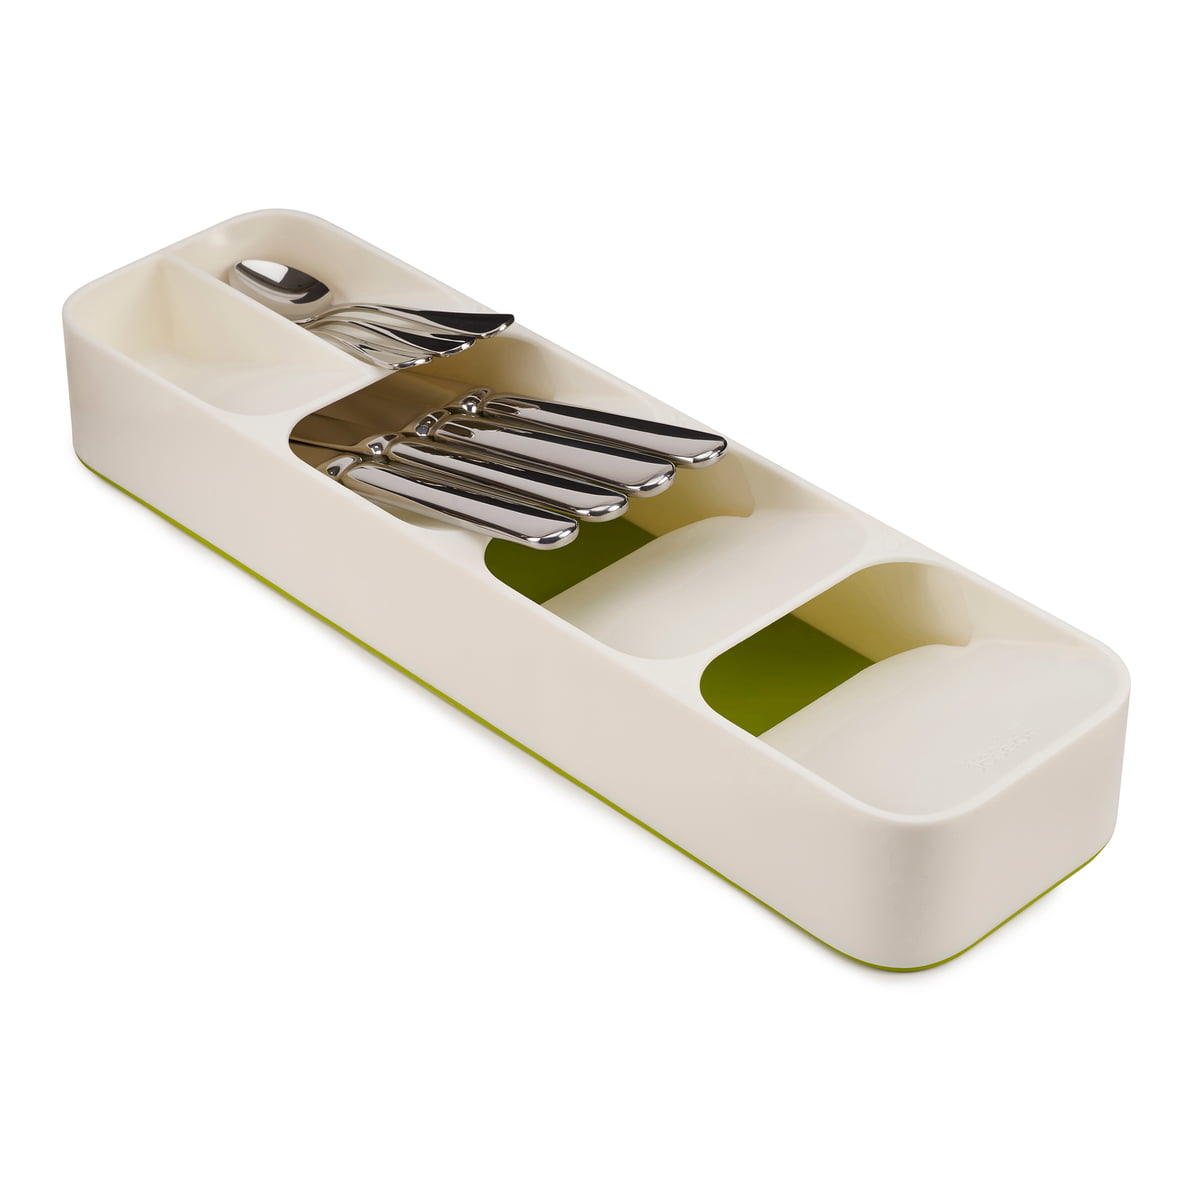 DrawerStore Cutlery Tray by Joseph Joseph